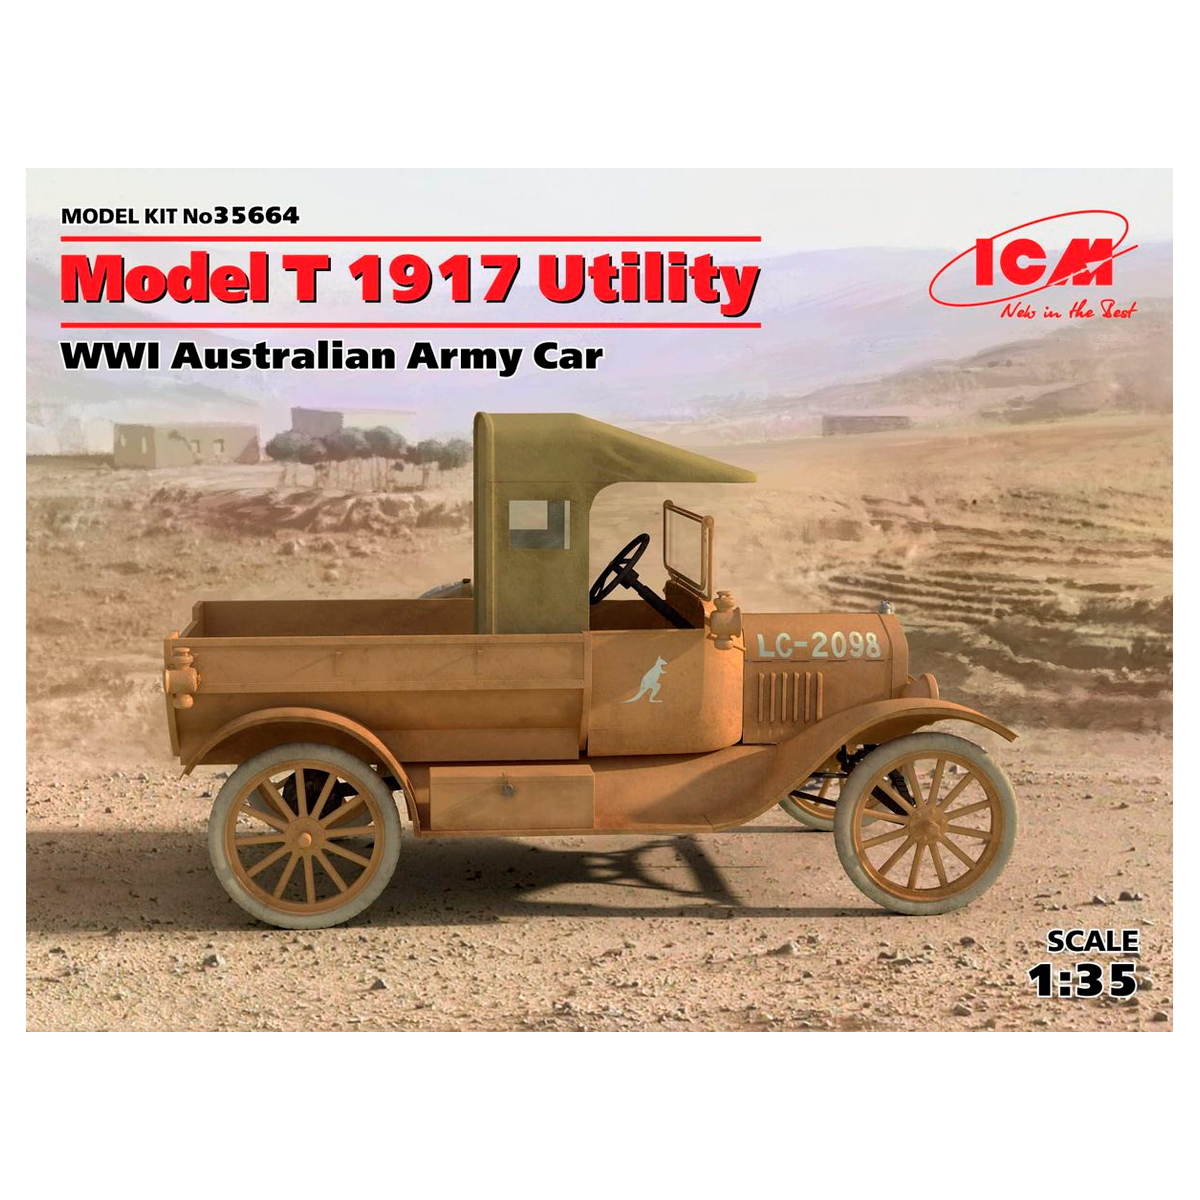 Model T 1917 Utility, WWI Australian Army Car 1/35